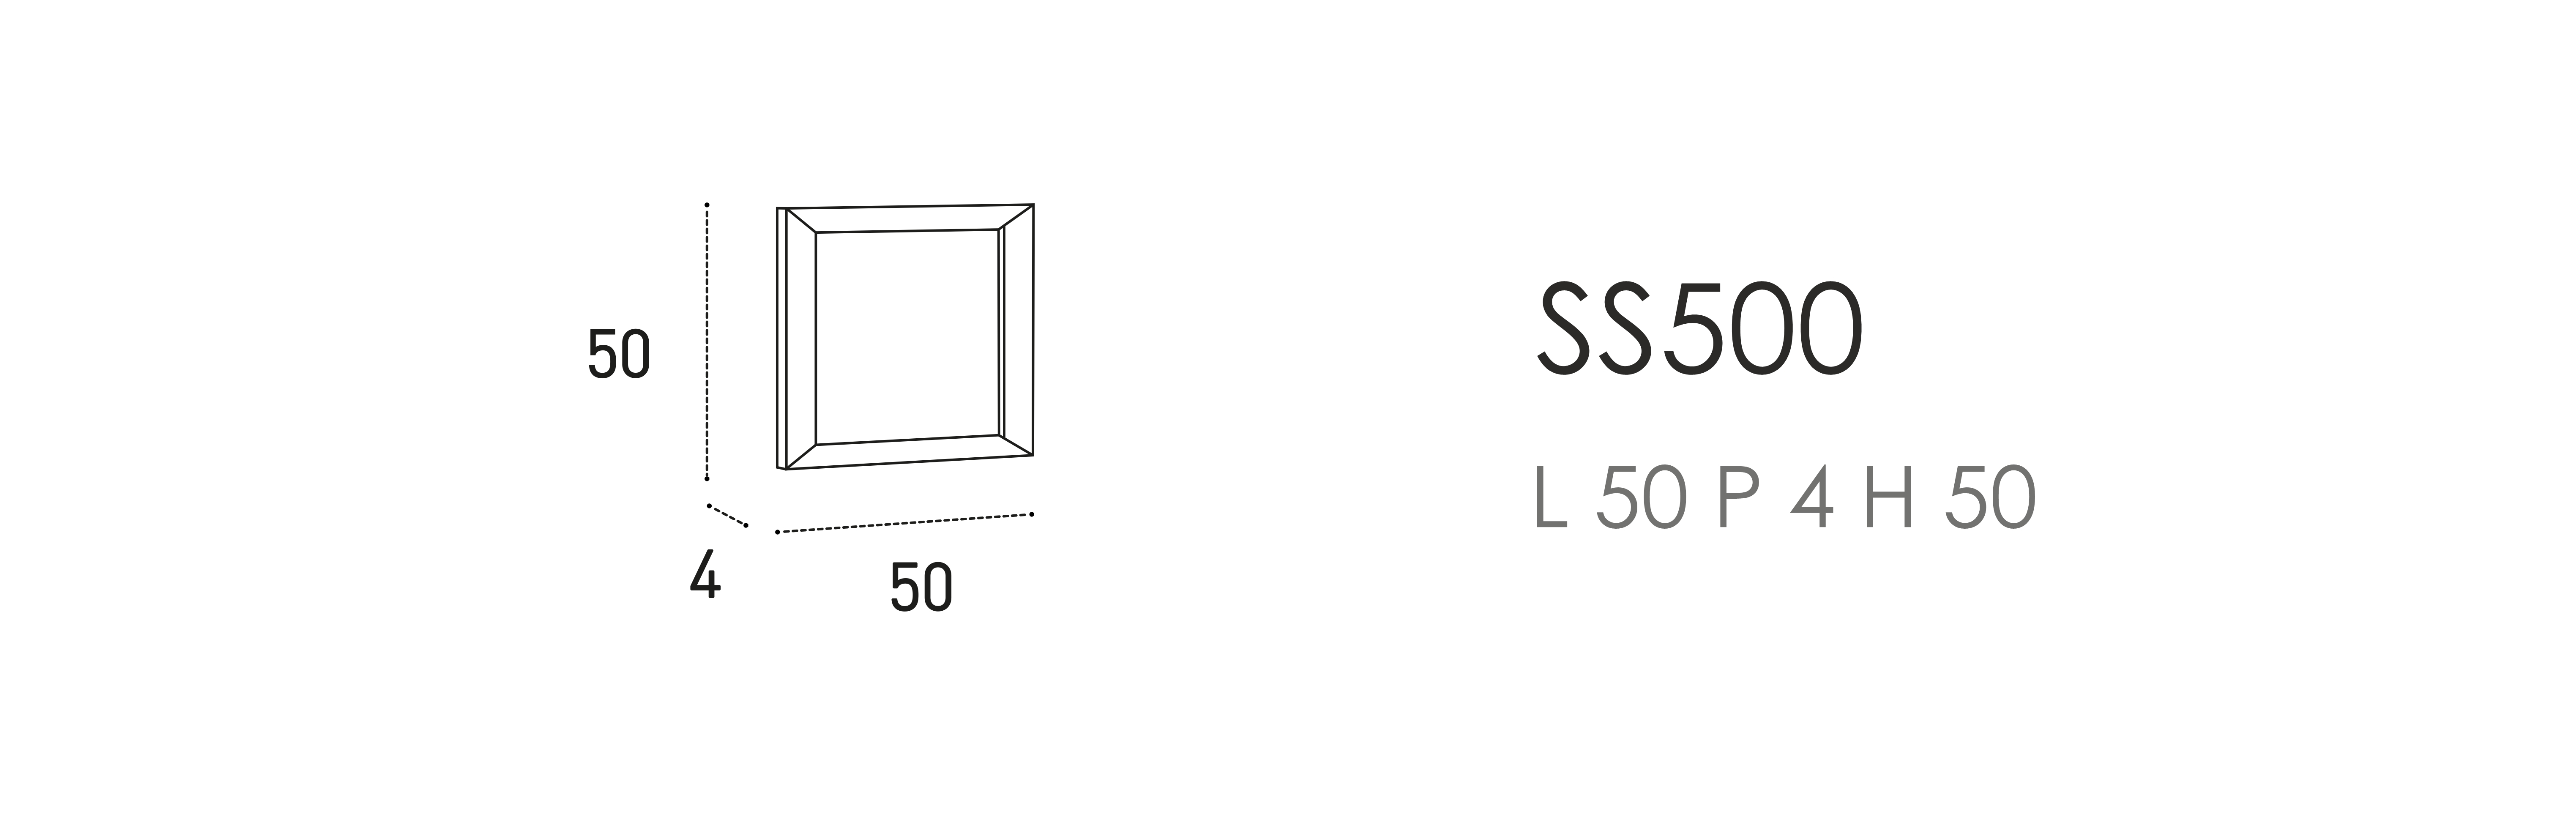 SS500 L 50 P 4 H 50